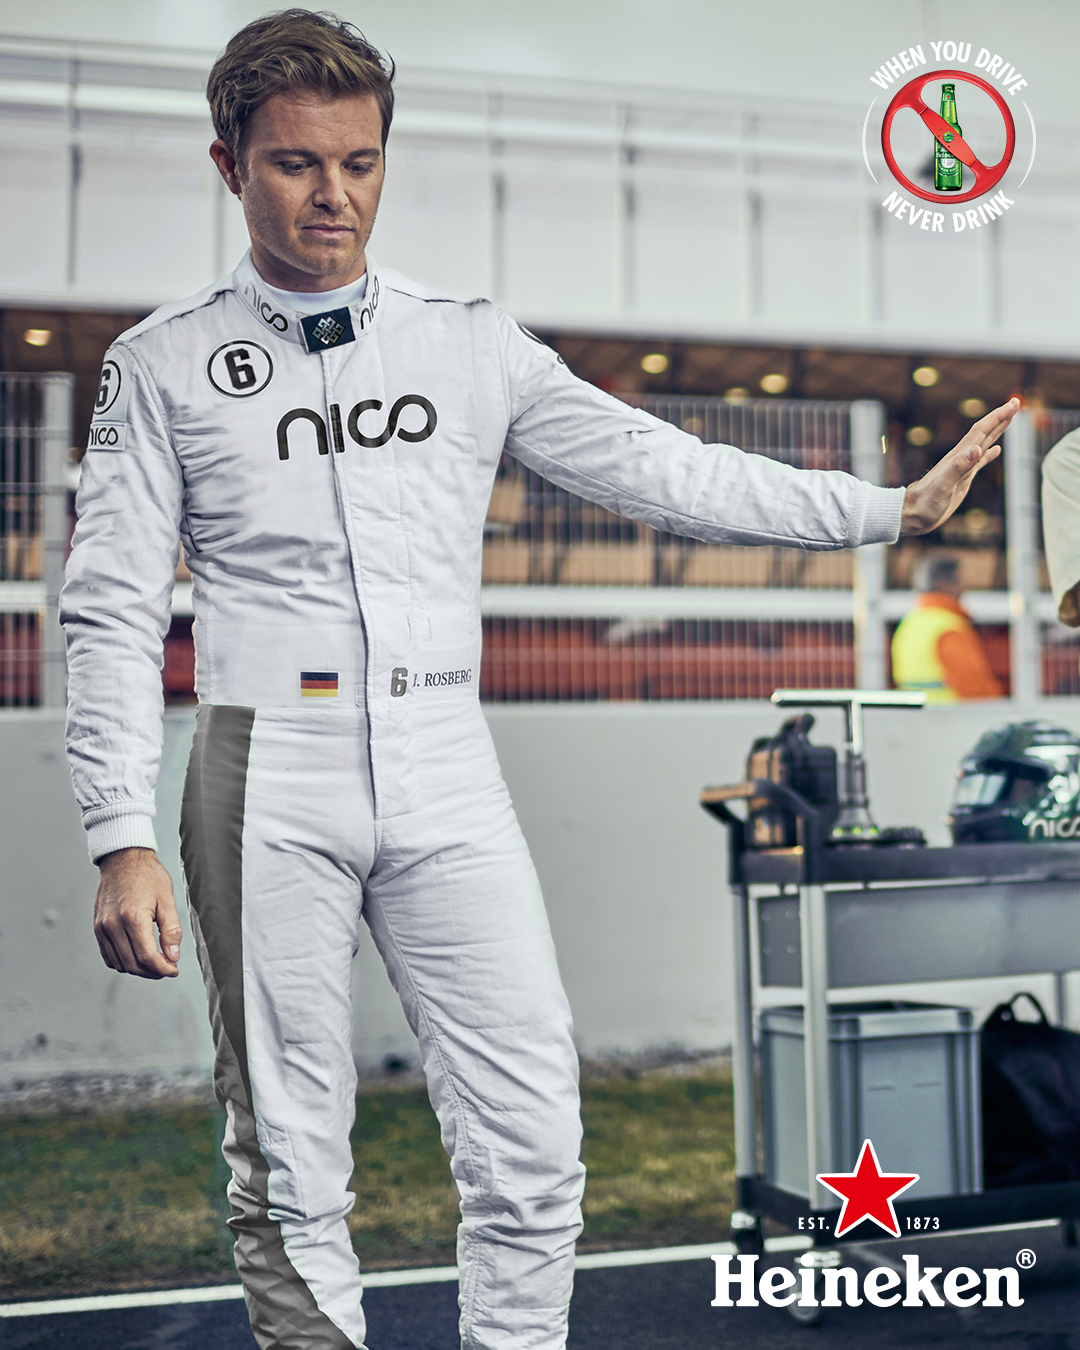 Nico Rosberg i Heineken: When You Drive, Never Drink